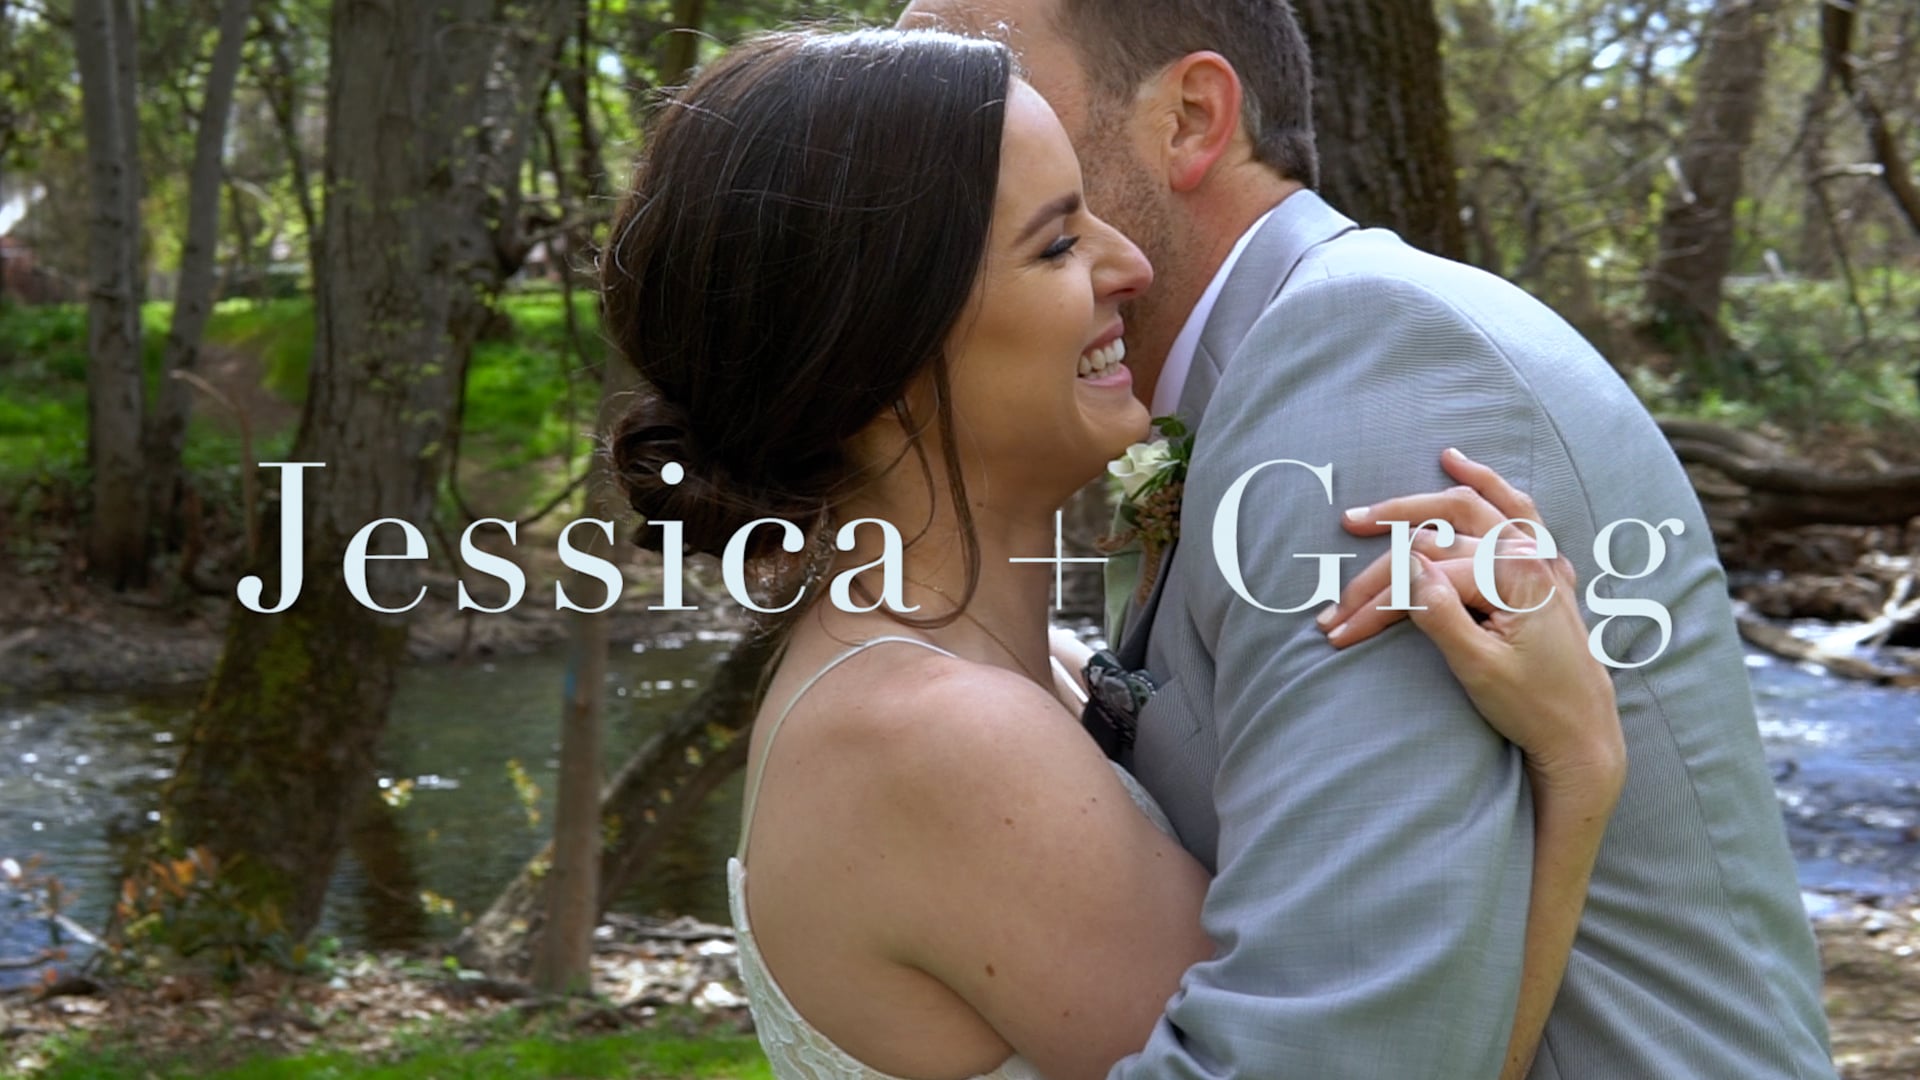 Greg + Jessica | Wedding Film